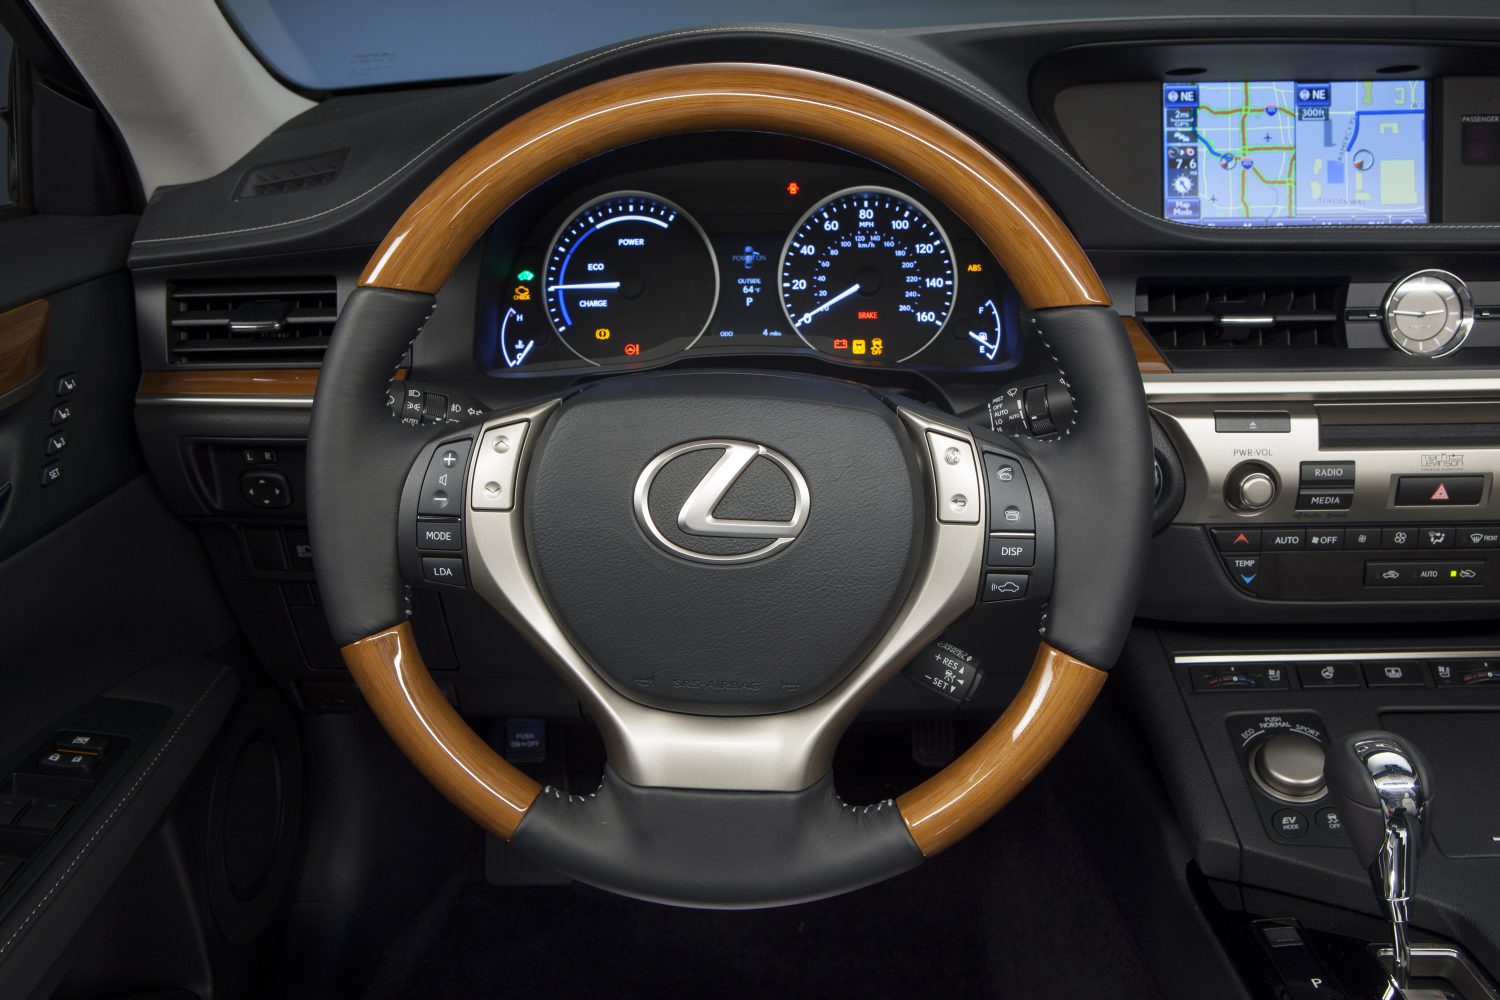 2013 - 2015 Lexus ES 300h 020 - Lexus USA Newsroom